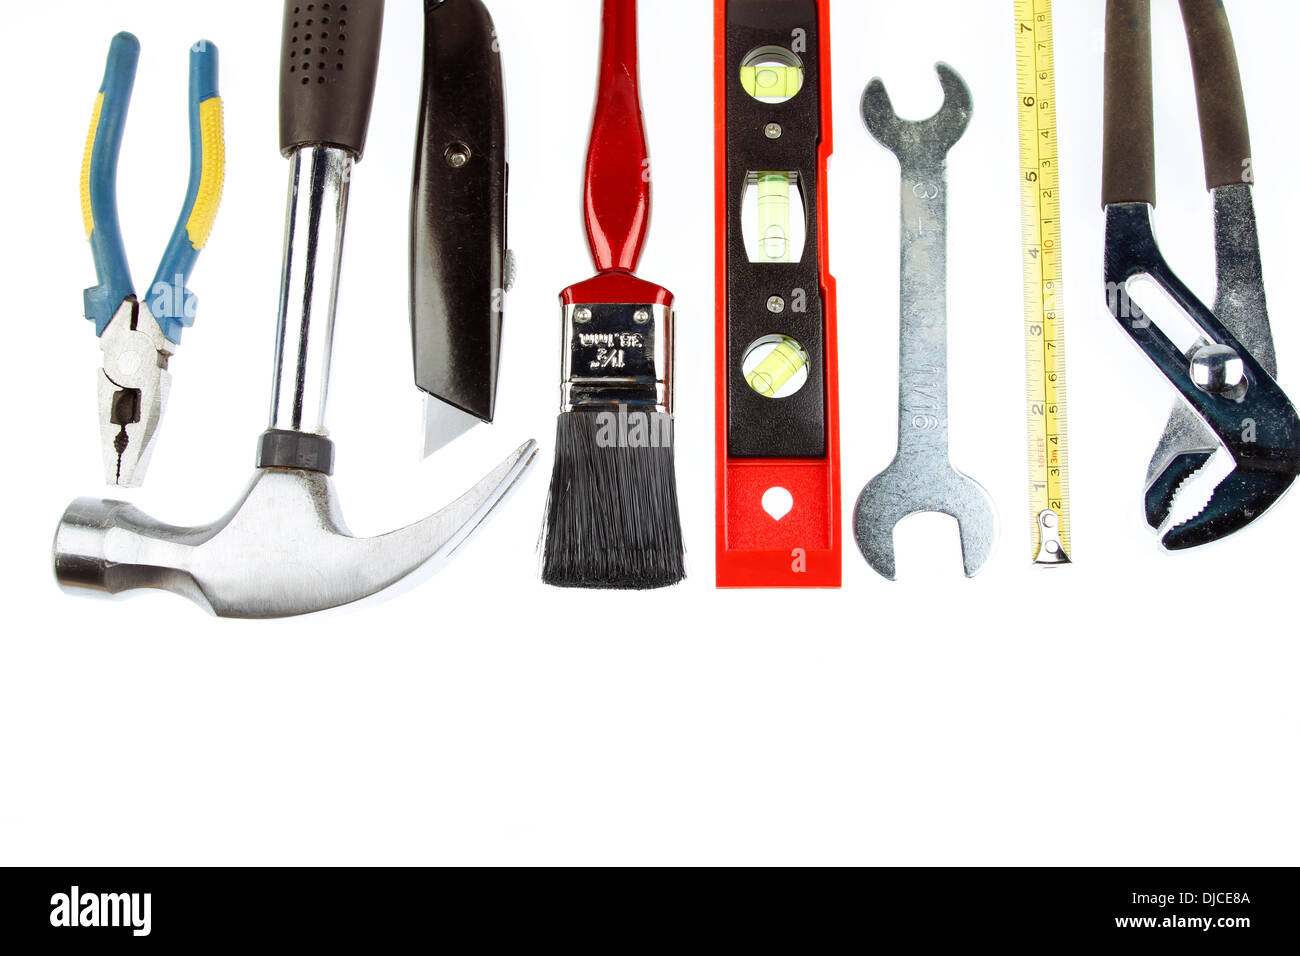 Assortment of tools on plain background Stock Photo